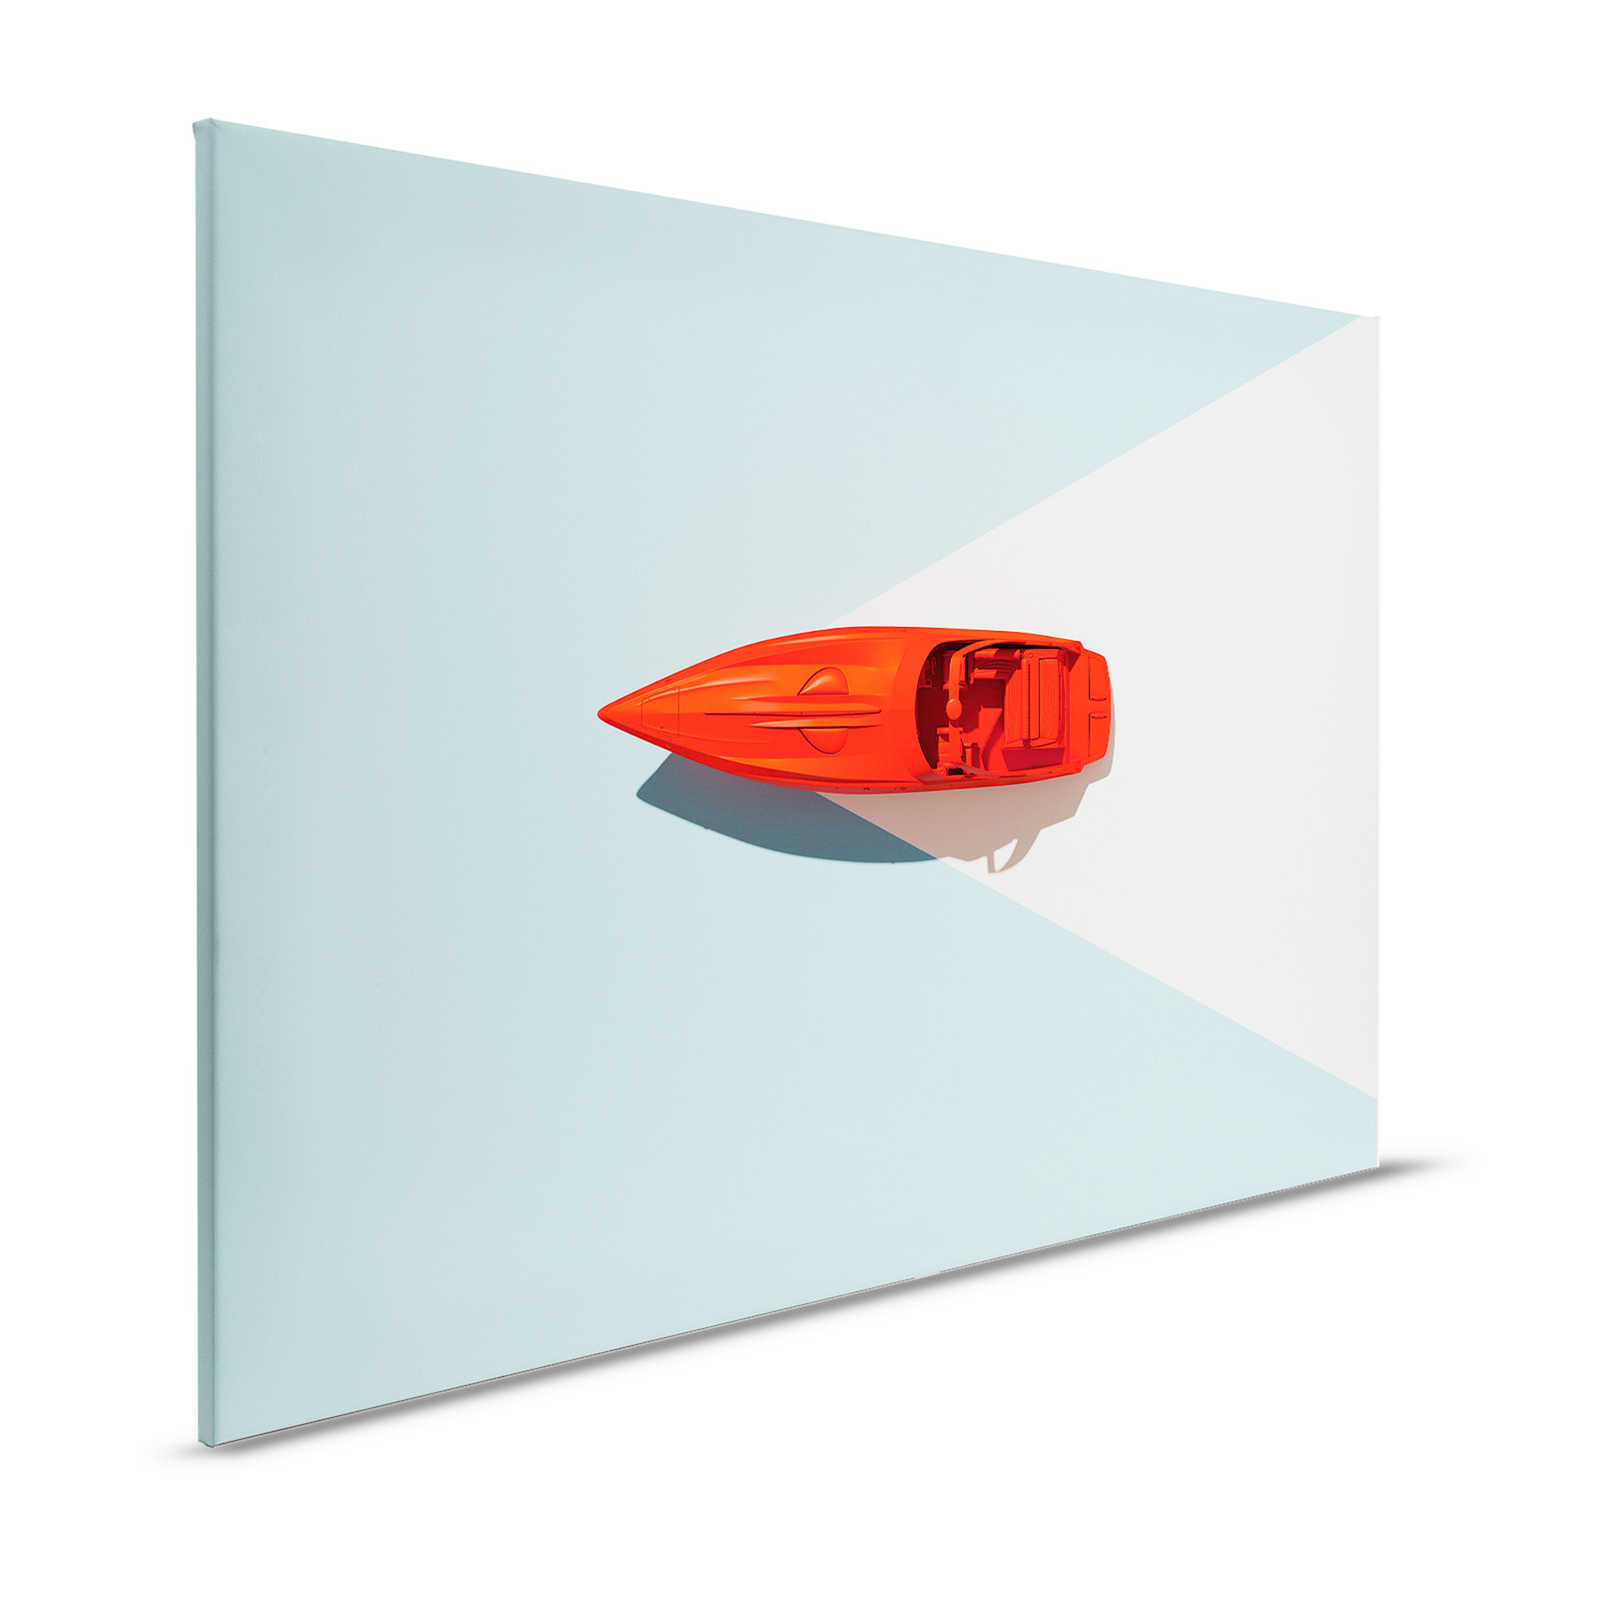         Key West 1 - Boot Leinwandbild Minimalistic Design – 1,20 m x 0,80 m
    